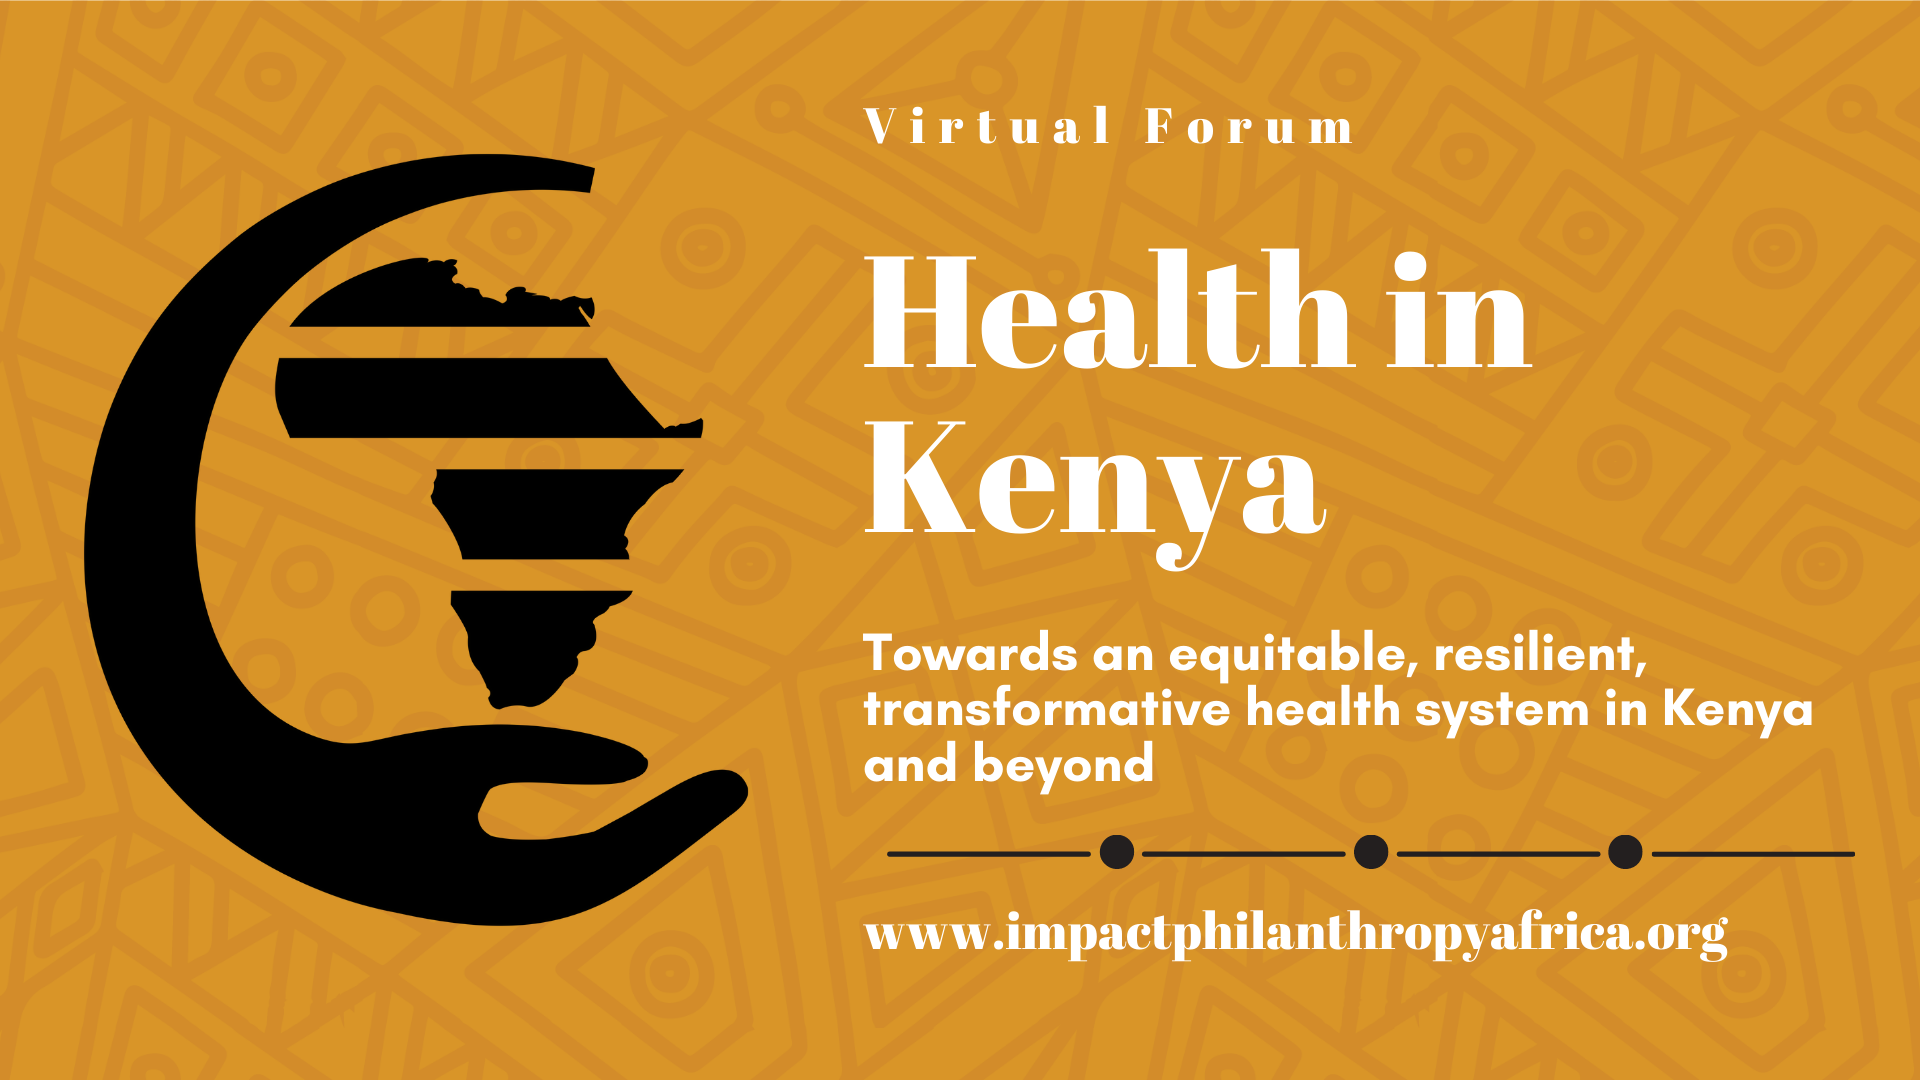 Health in Kenya Virtual Forum by Impact Philanthropy Africa